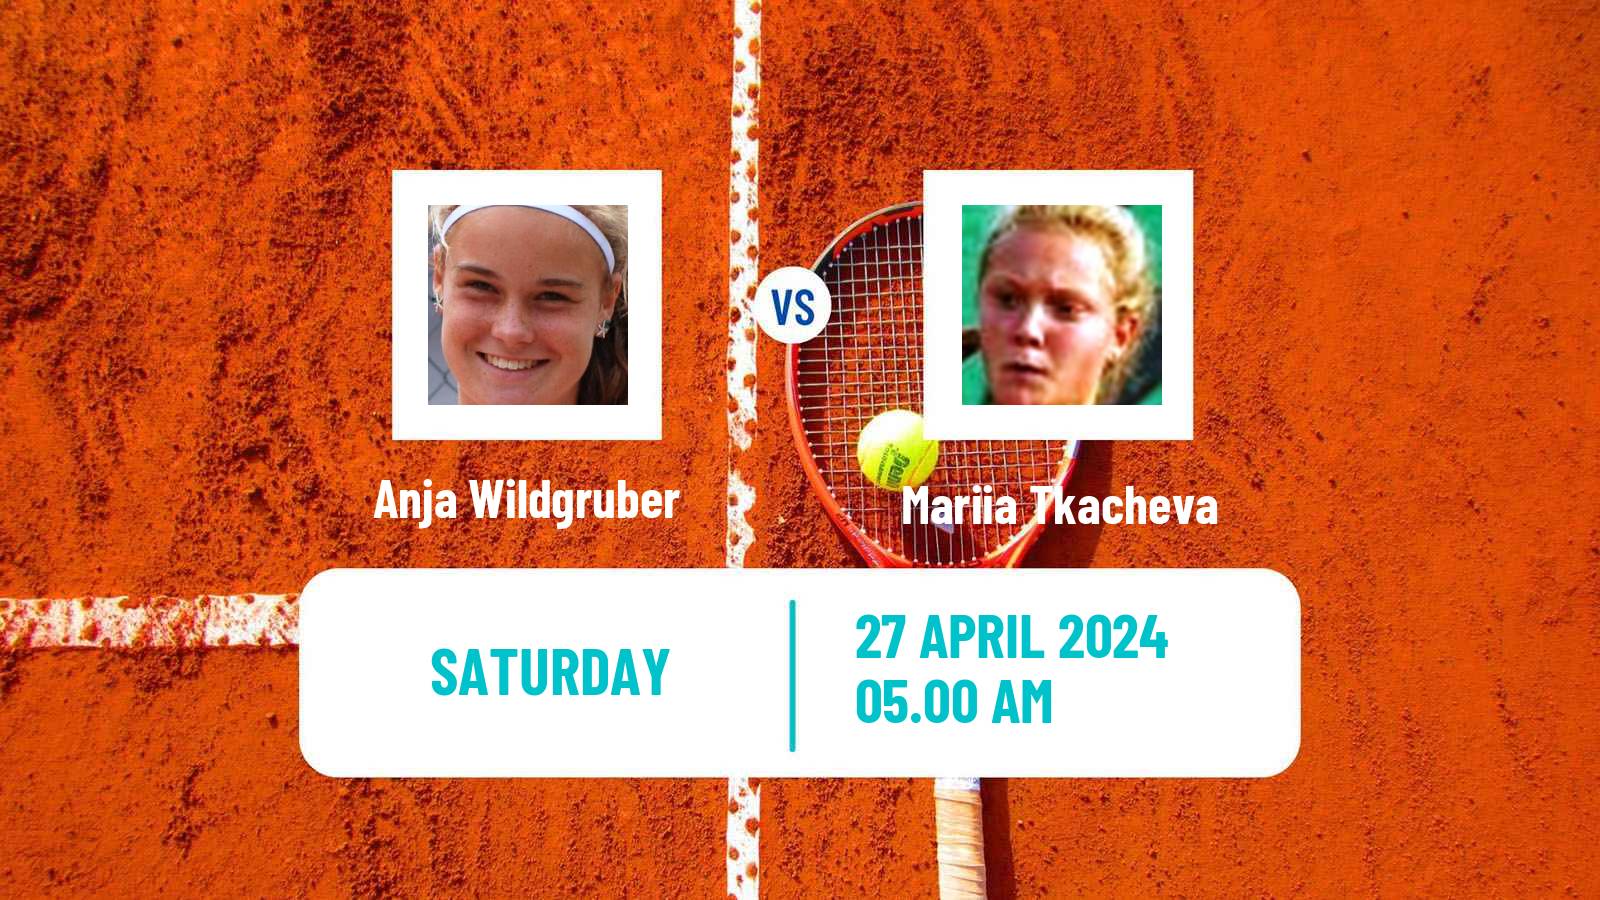 Tennis ITF W15 Monastir 15 Women Anja Wildgruber - Mariia Tkacheva